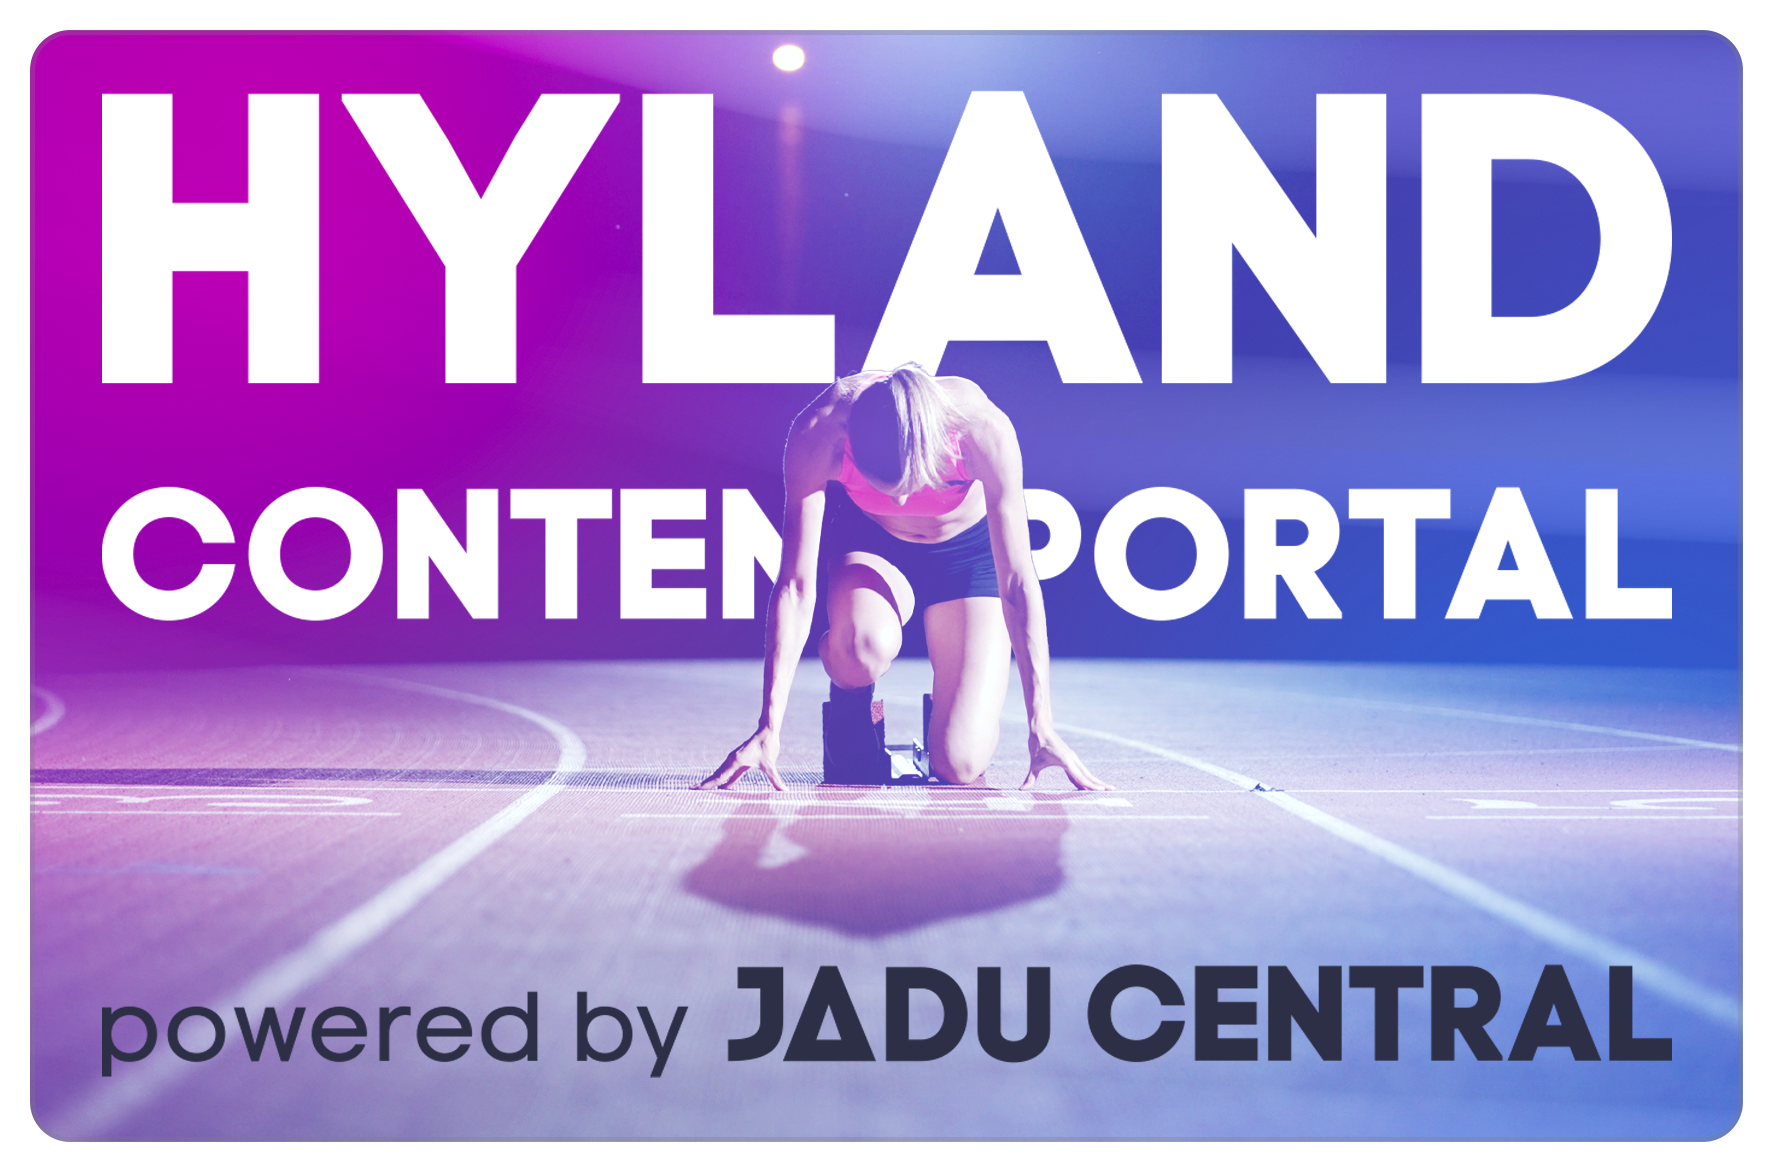 Hyland Content Portal powered by Jadu Central